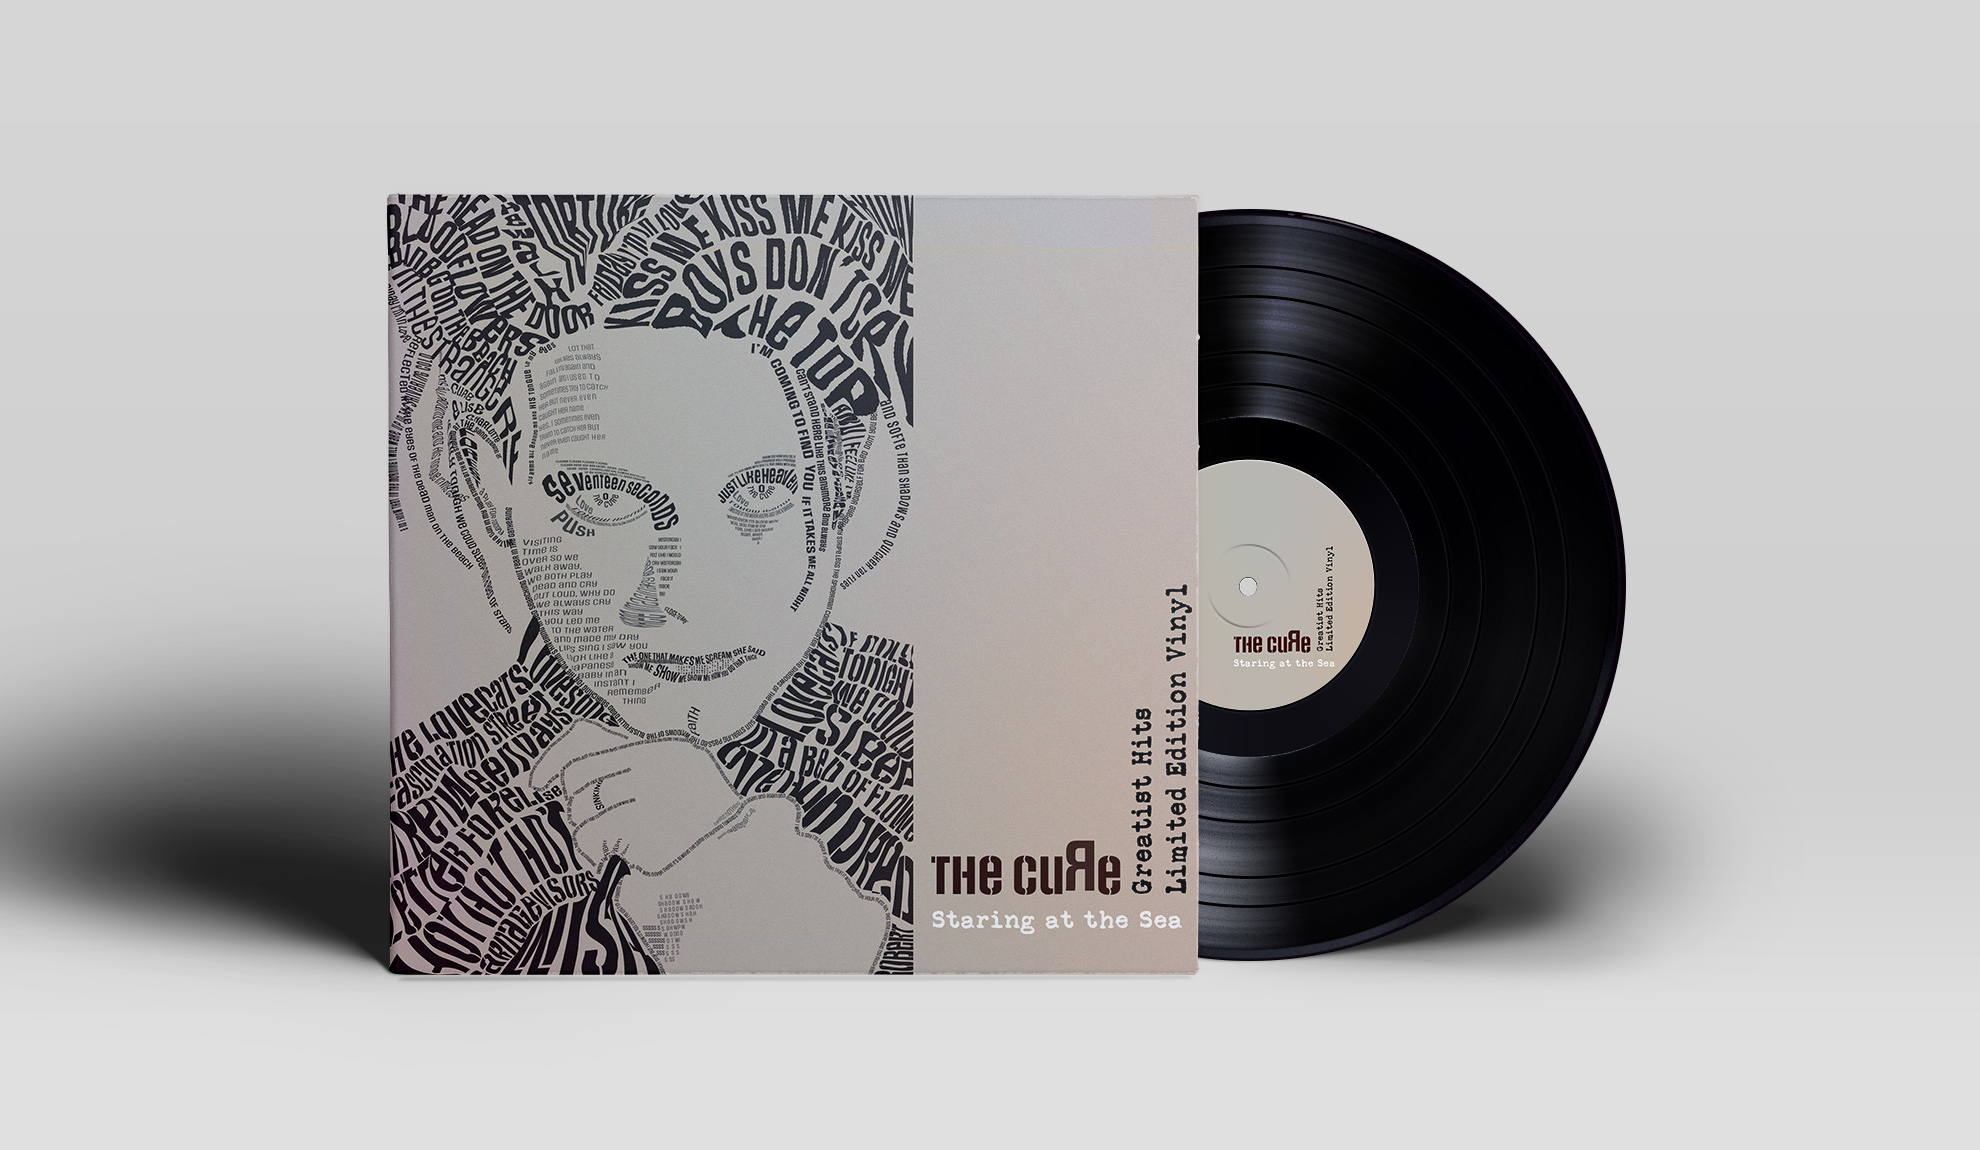 The Cure Album Cover concept